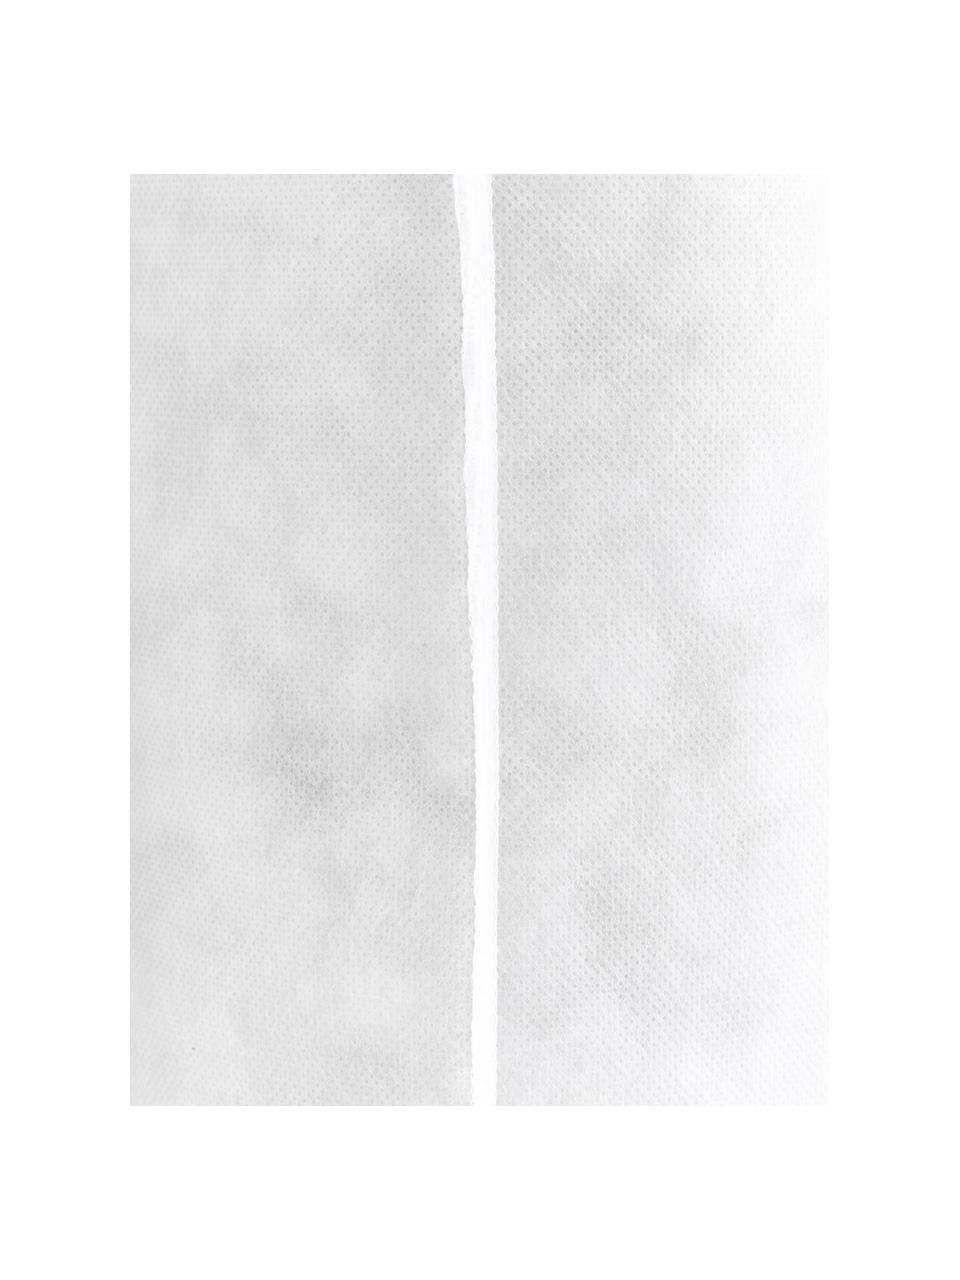 Garnissage en polyester Egret, 35 x 110, Blanc, larg. 35 x long. 110 cm